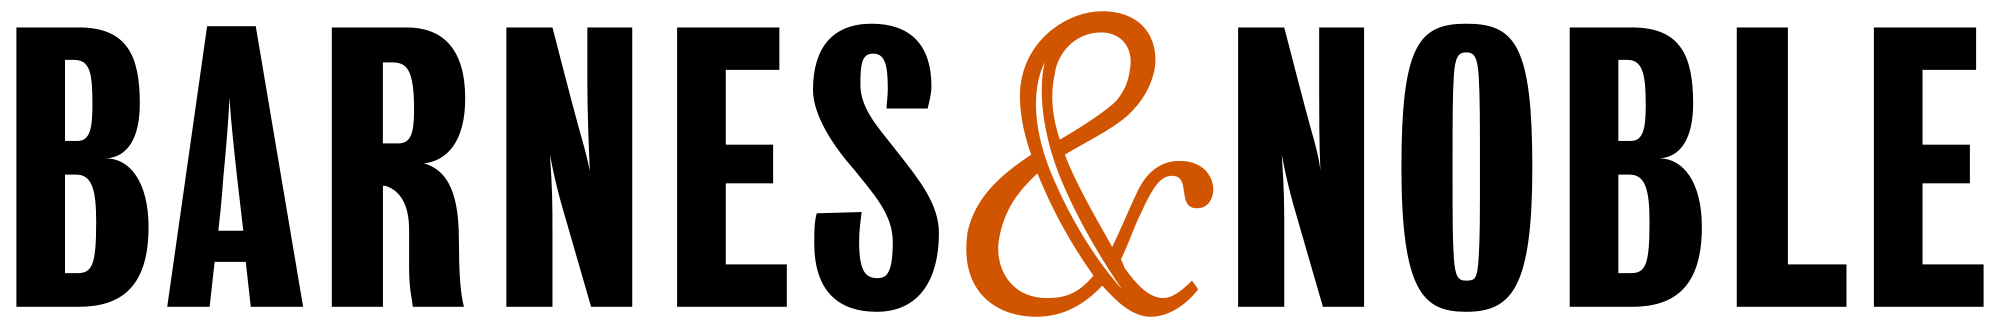 B&N logo.png